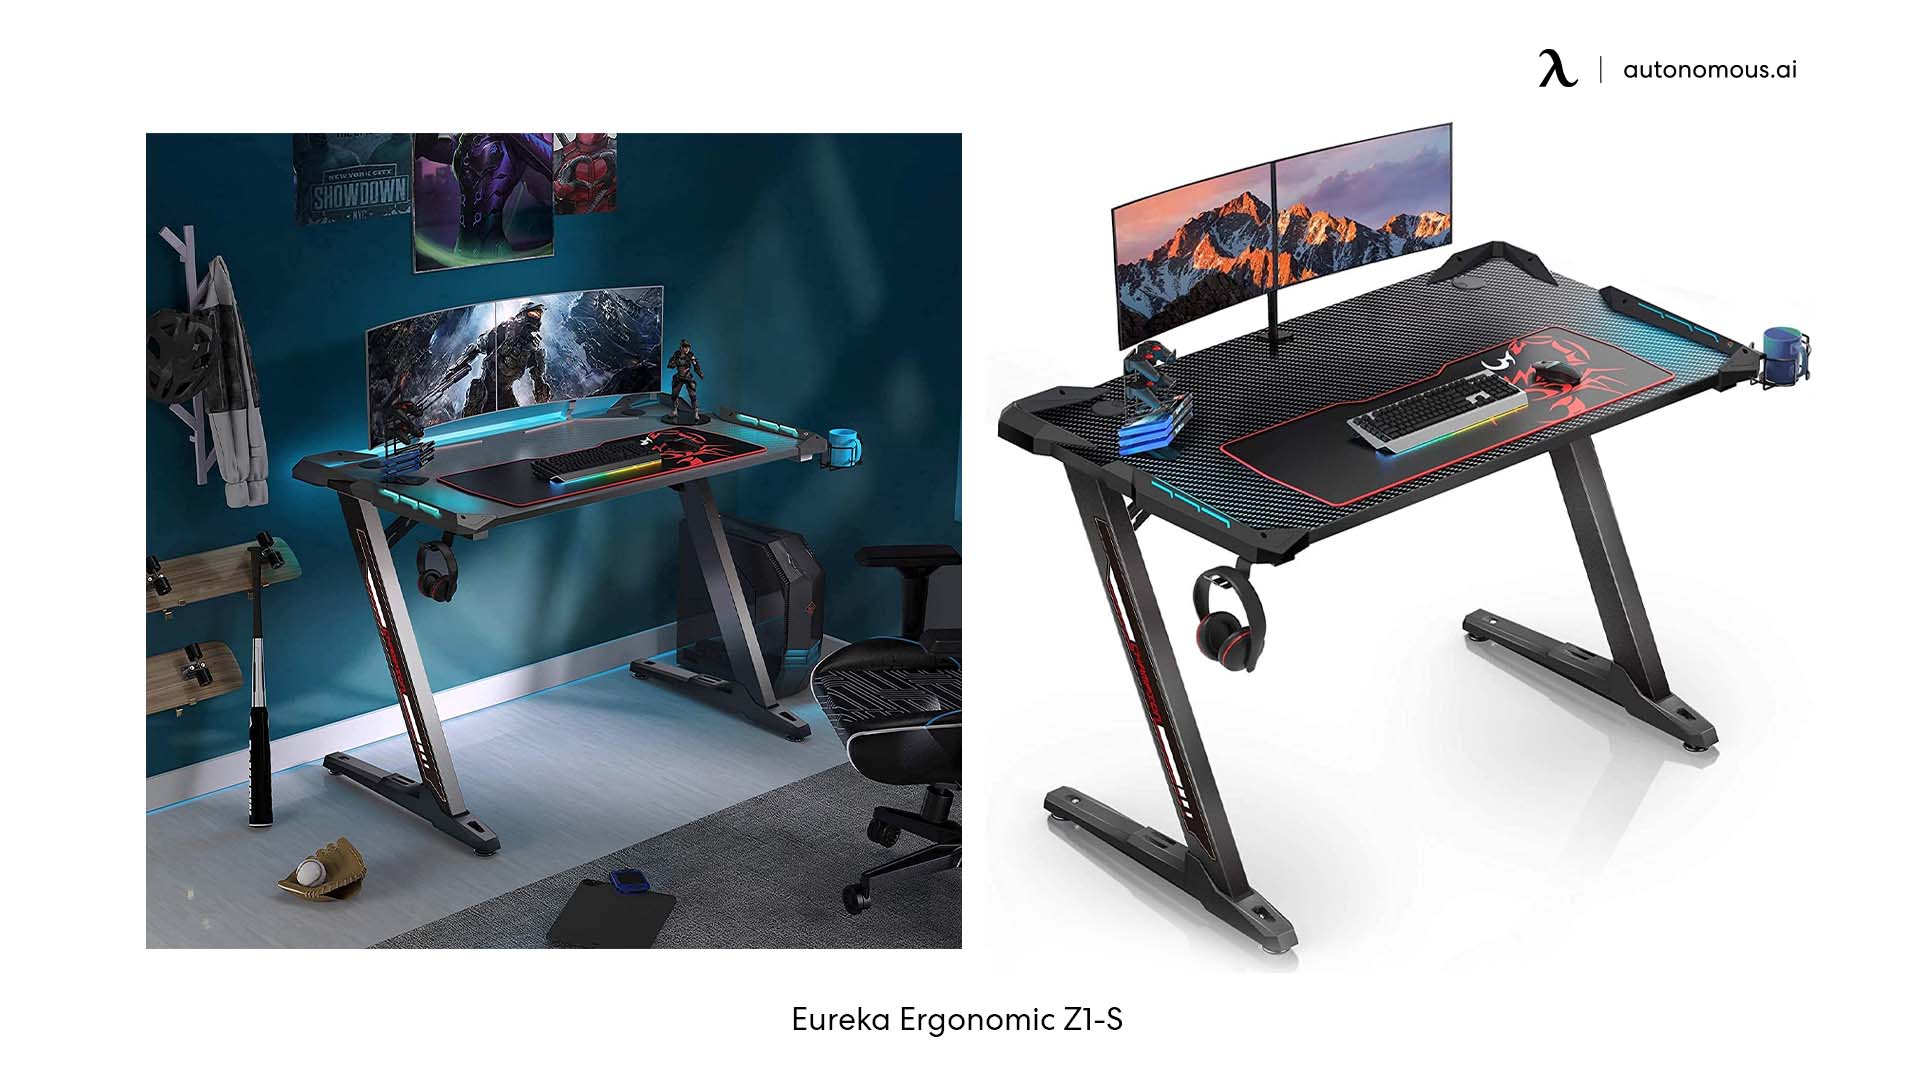 Eureka Ergonomic Z1-S black study desk